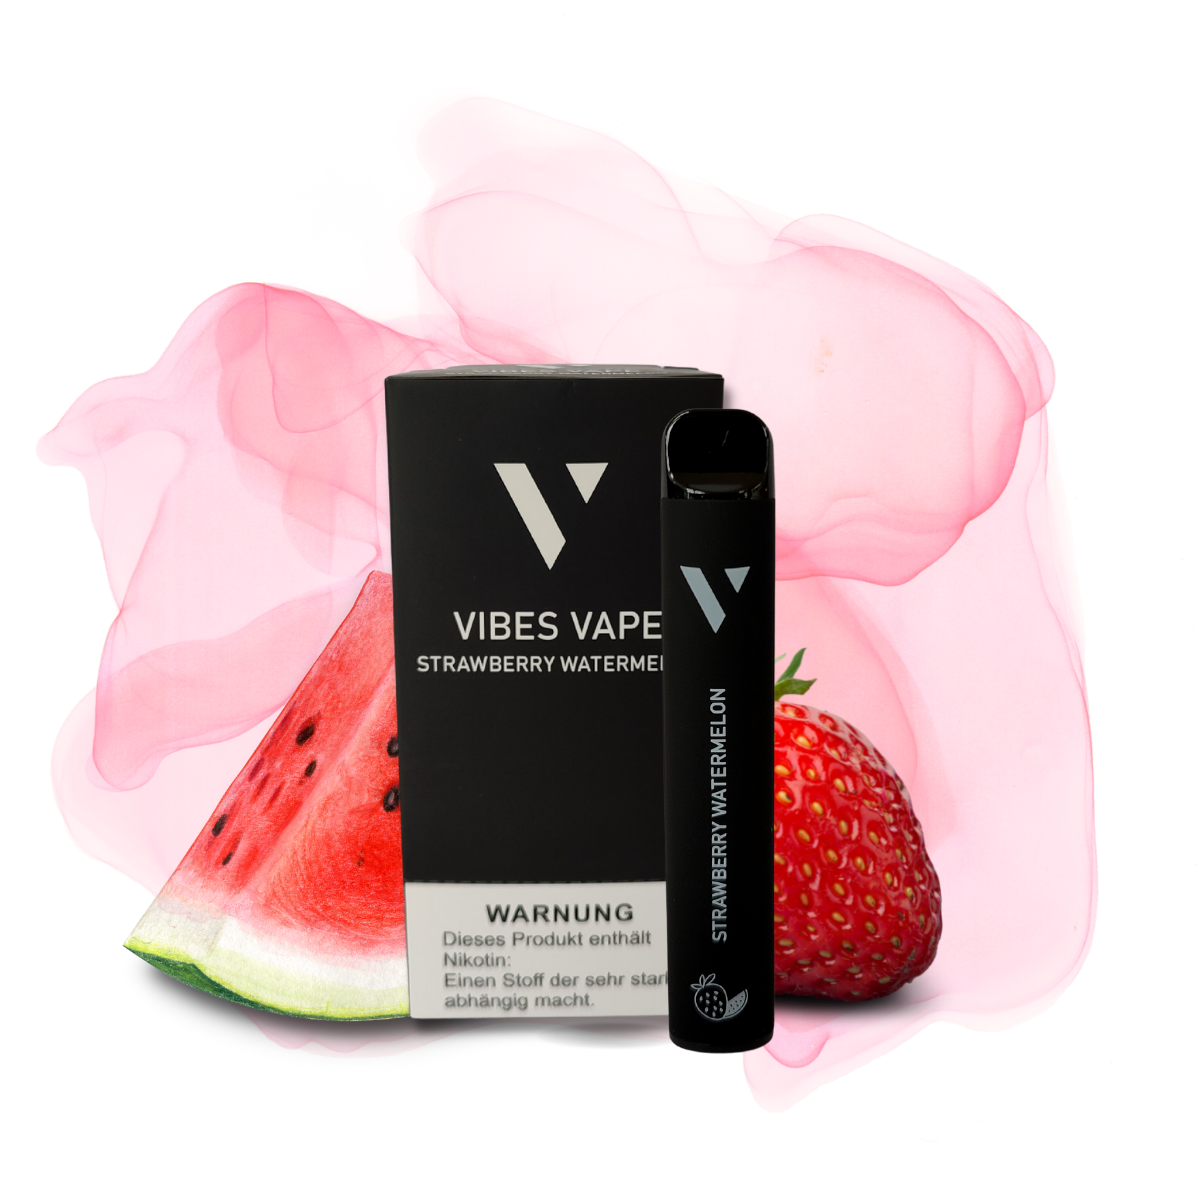 10x Vibes Vape - Strawberry Watermelon - vibesvape.de